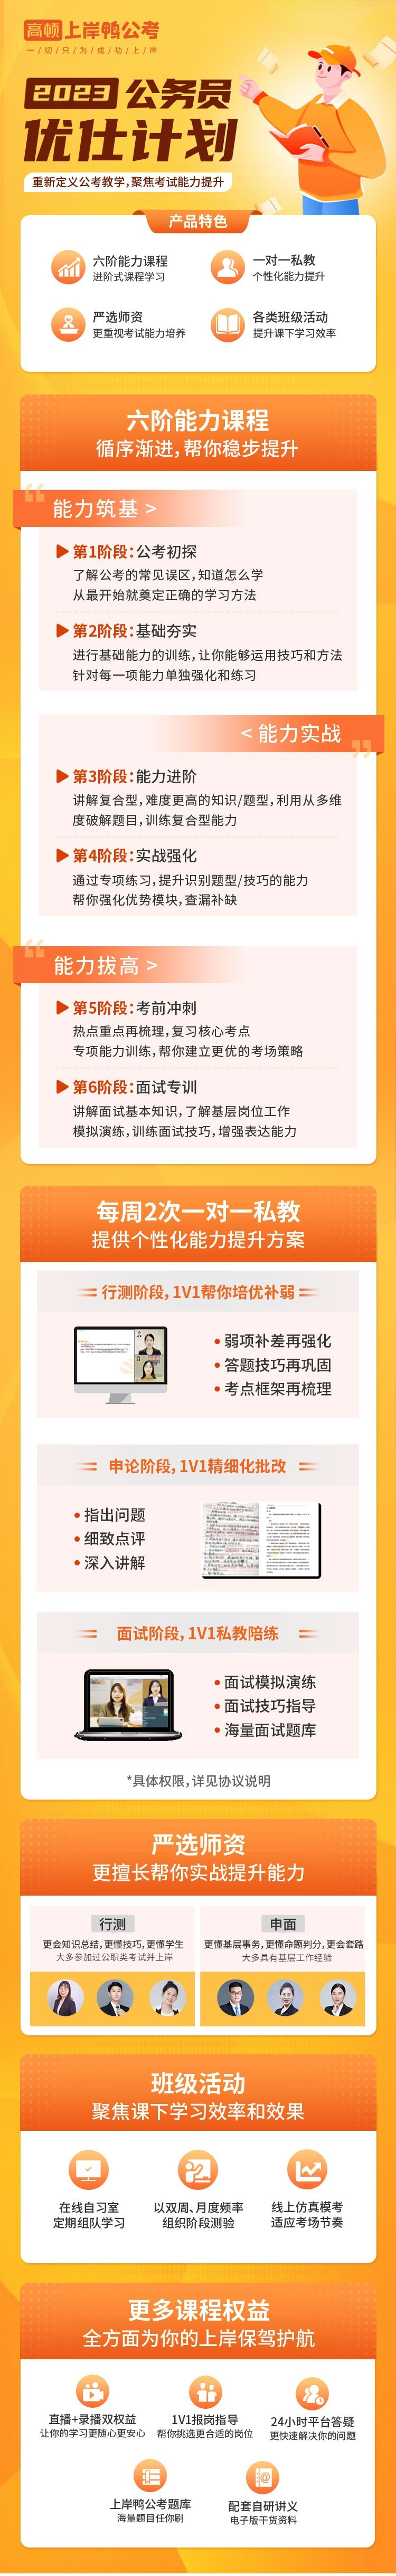 https://simg01.gaodunwangxiao.com/uploadfiles/product-center/202208/11/7ce10_20220811114544.jpg